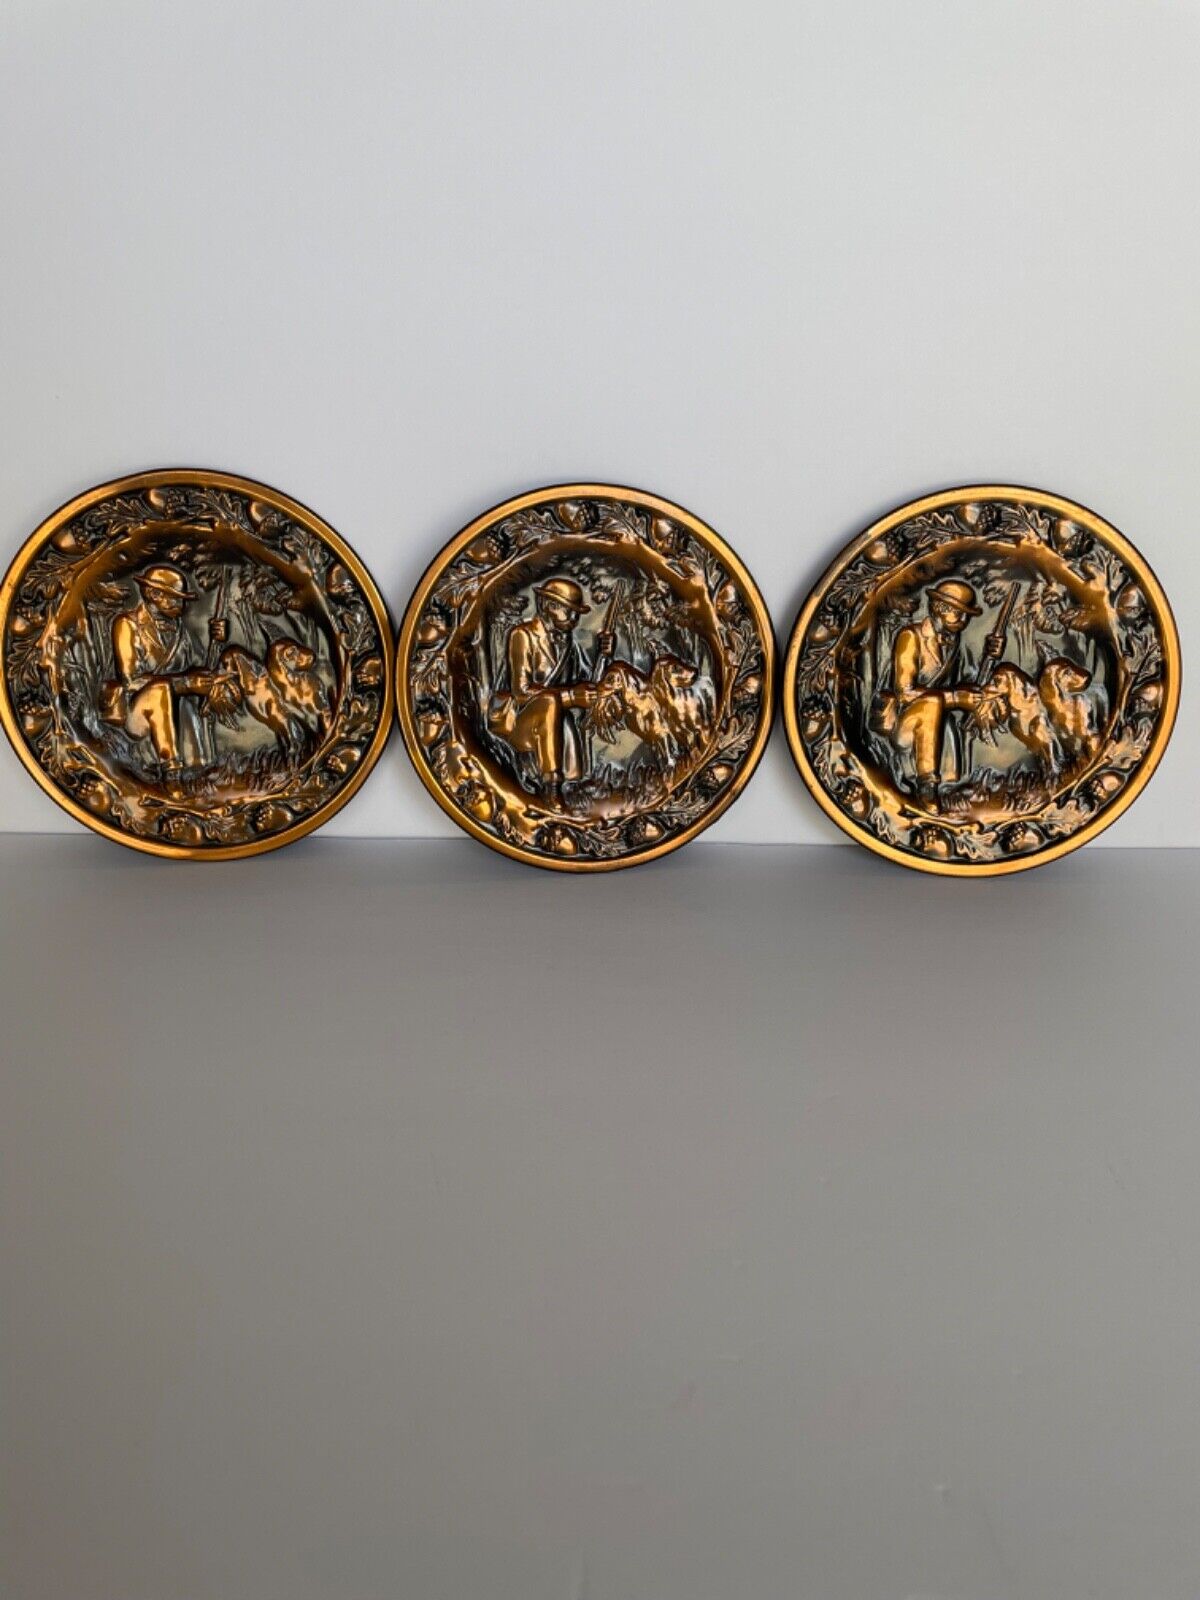  Set OF 3 Vintage Copper Art Wall Decor Plate Dishes Ornate Hunter Hunting Dog 